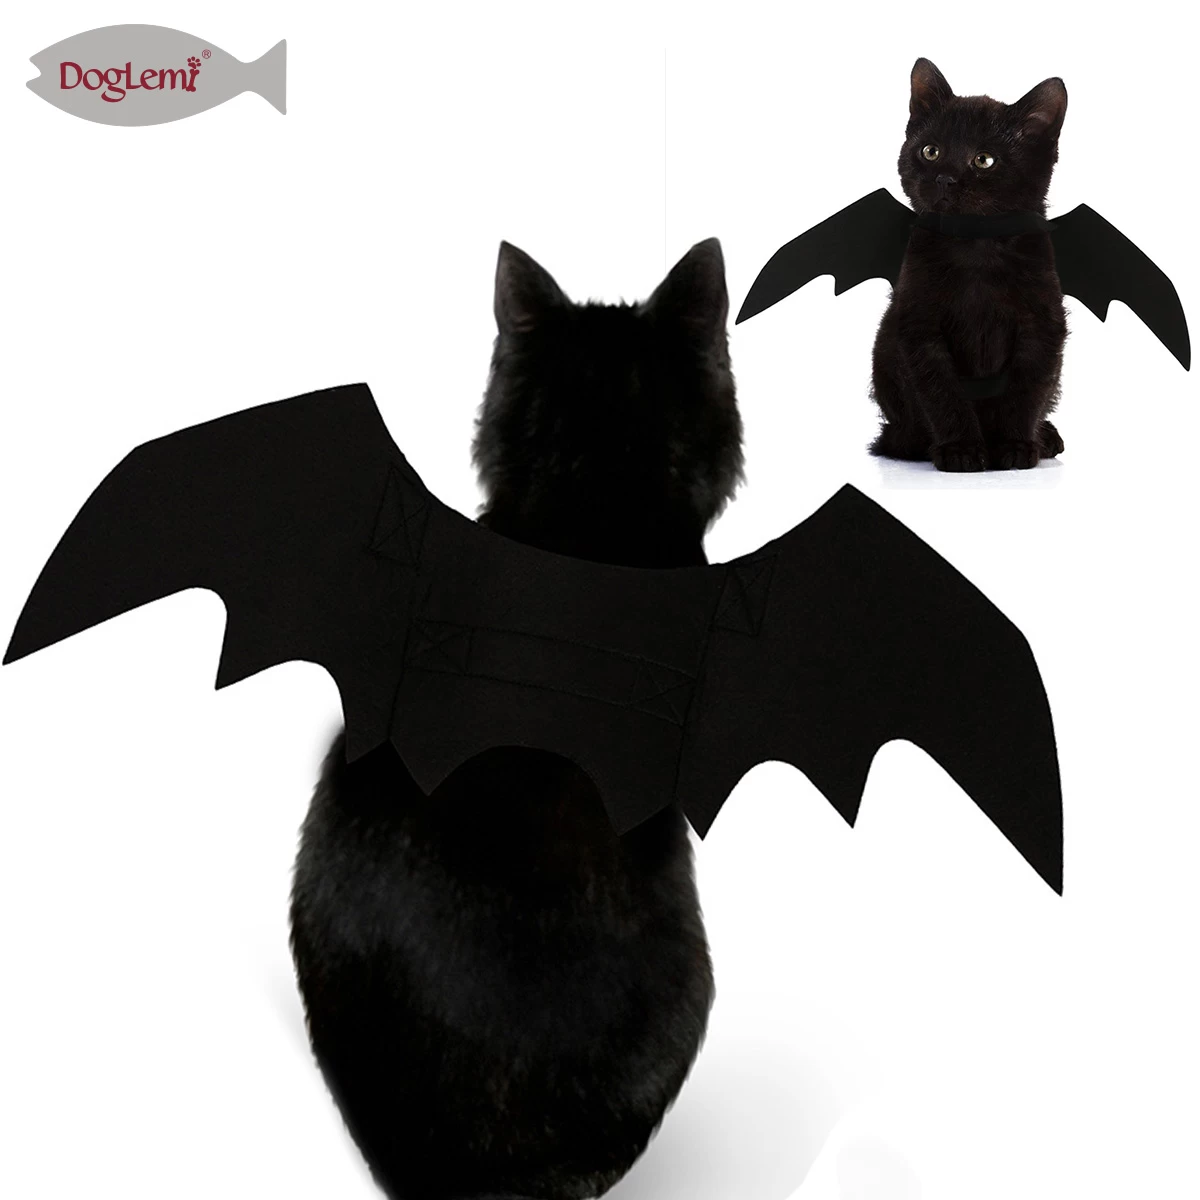 Alas de murciélago mascota Halloween